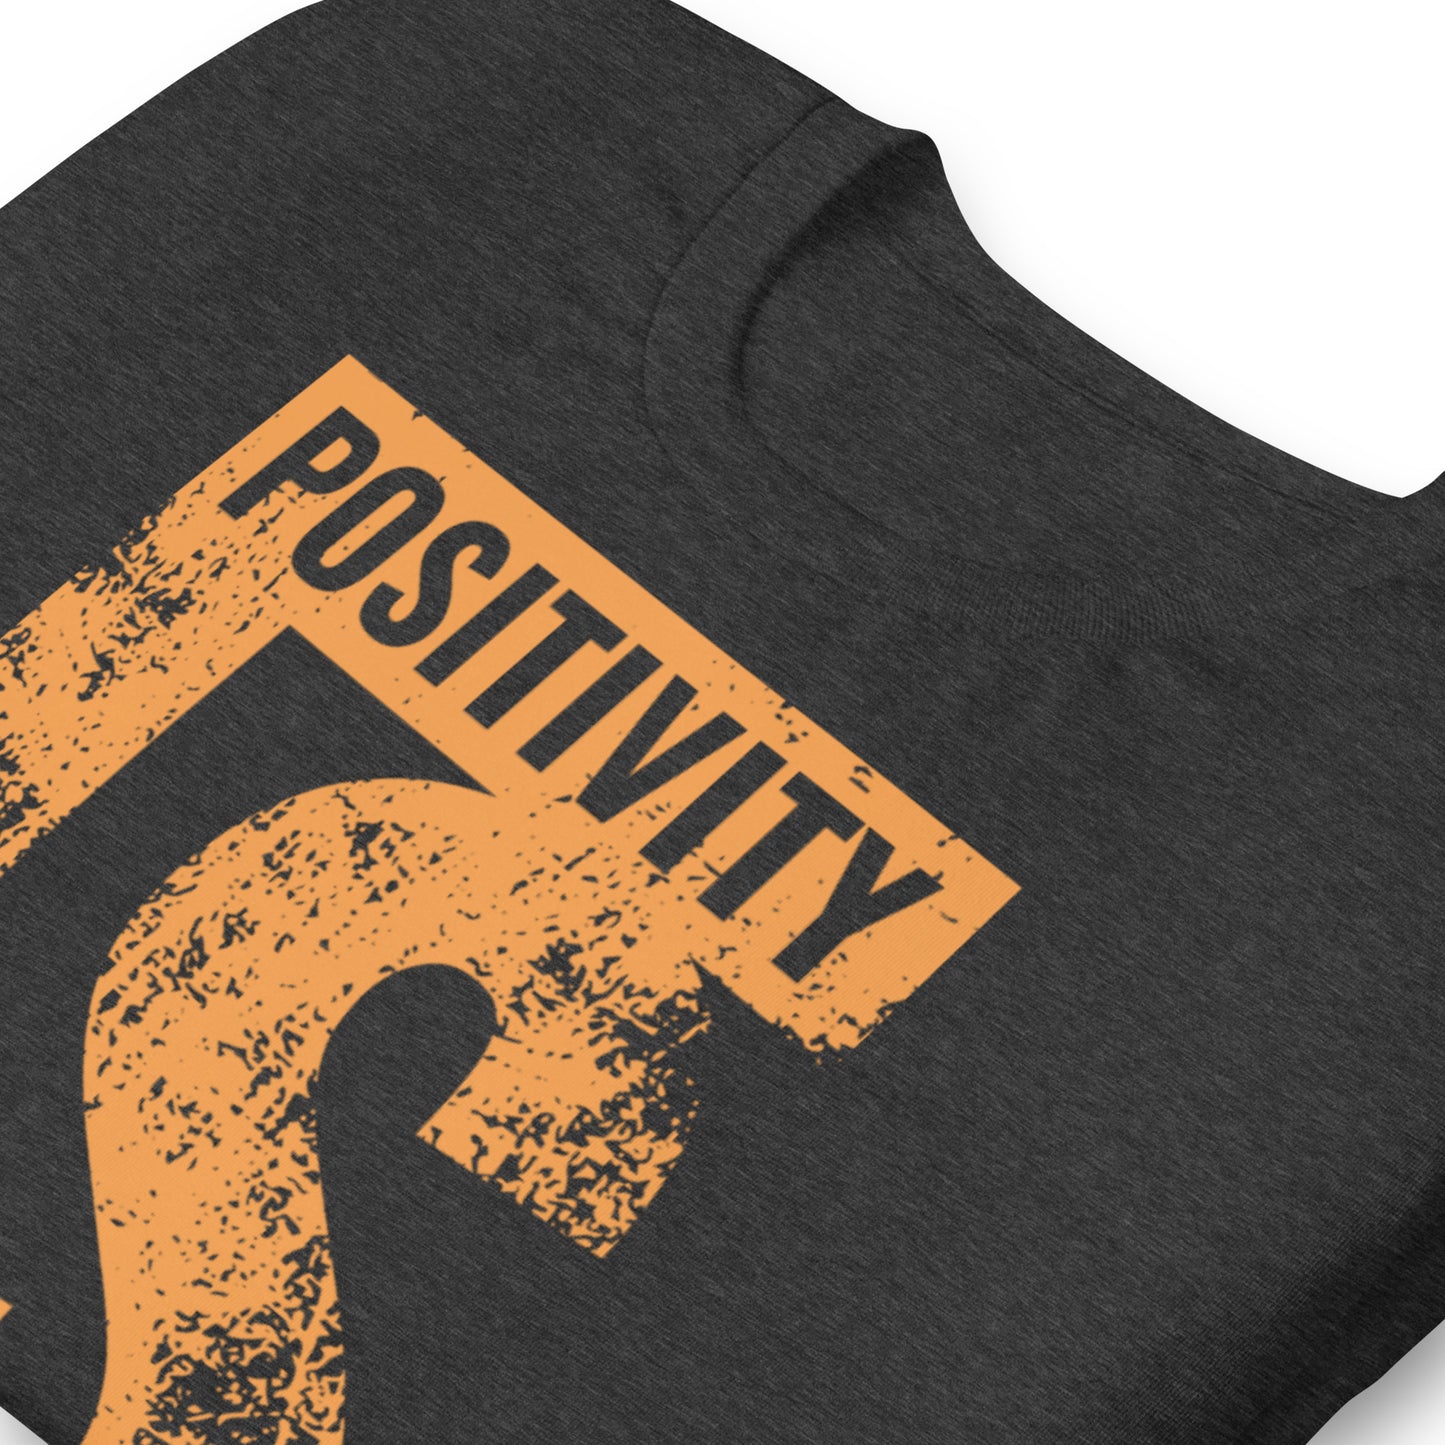 Positivity is Power Quality Cotton Bella Canvas Adult T-Shirt